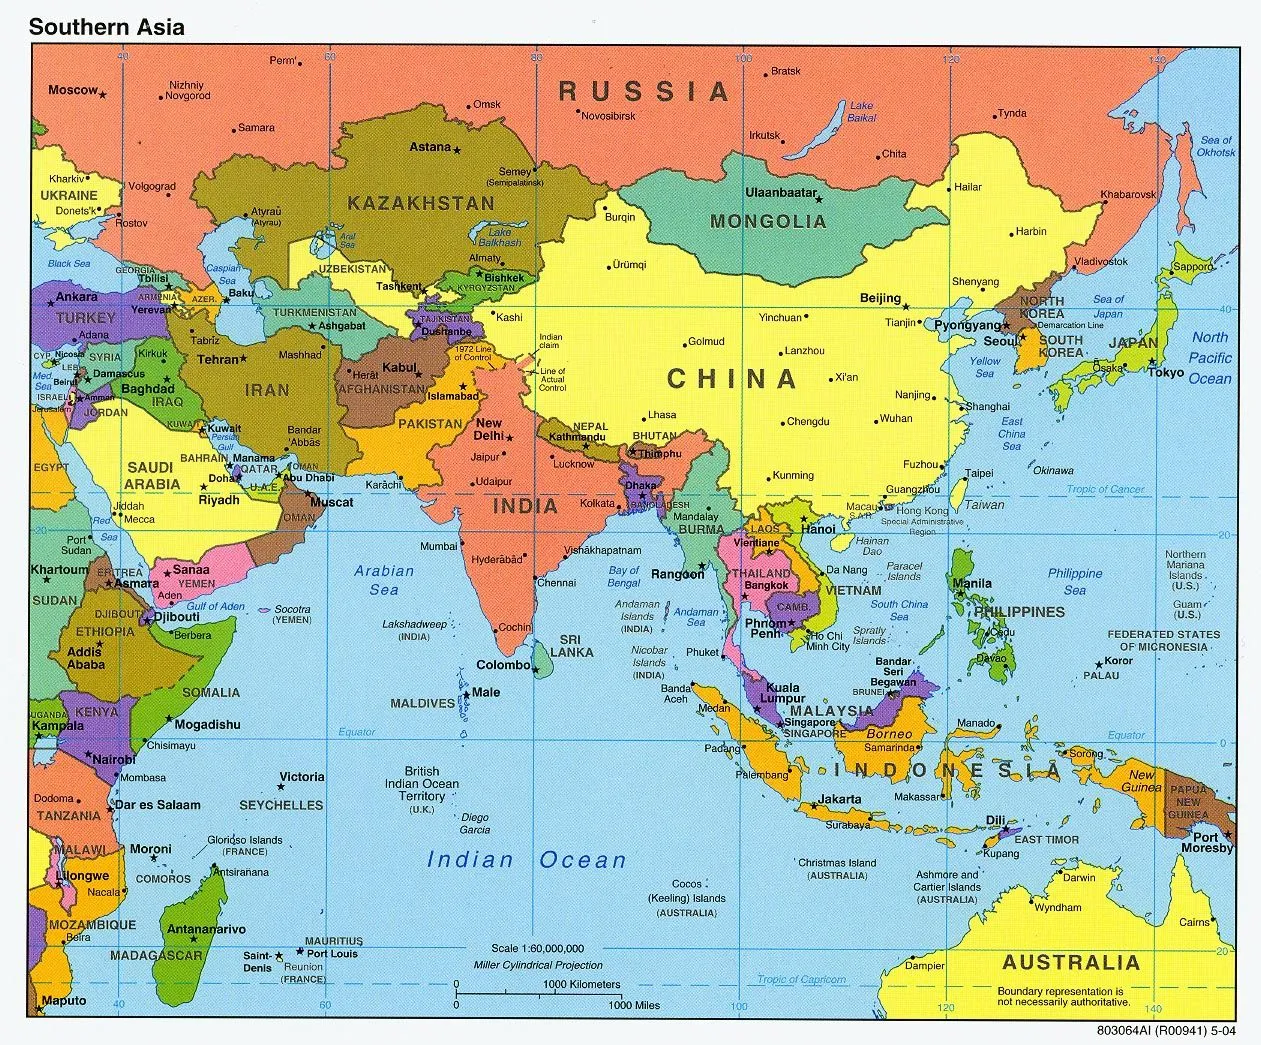 Mapa Politico de Asia del Sur 2004 - Tamaño completo